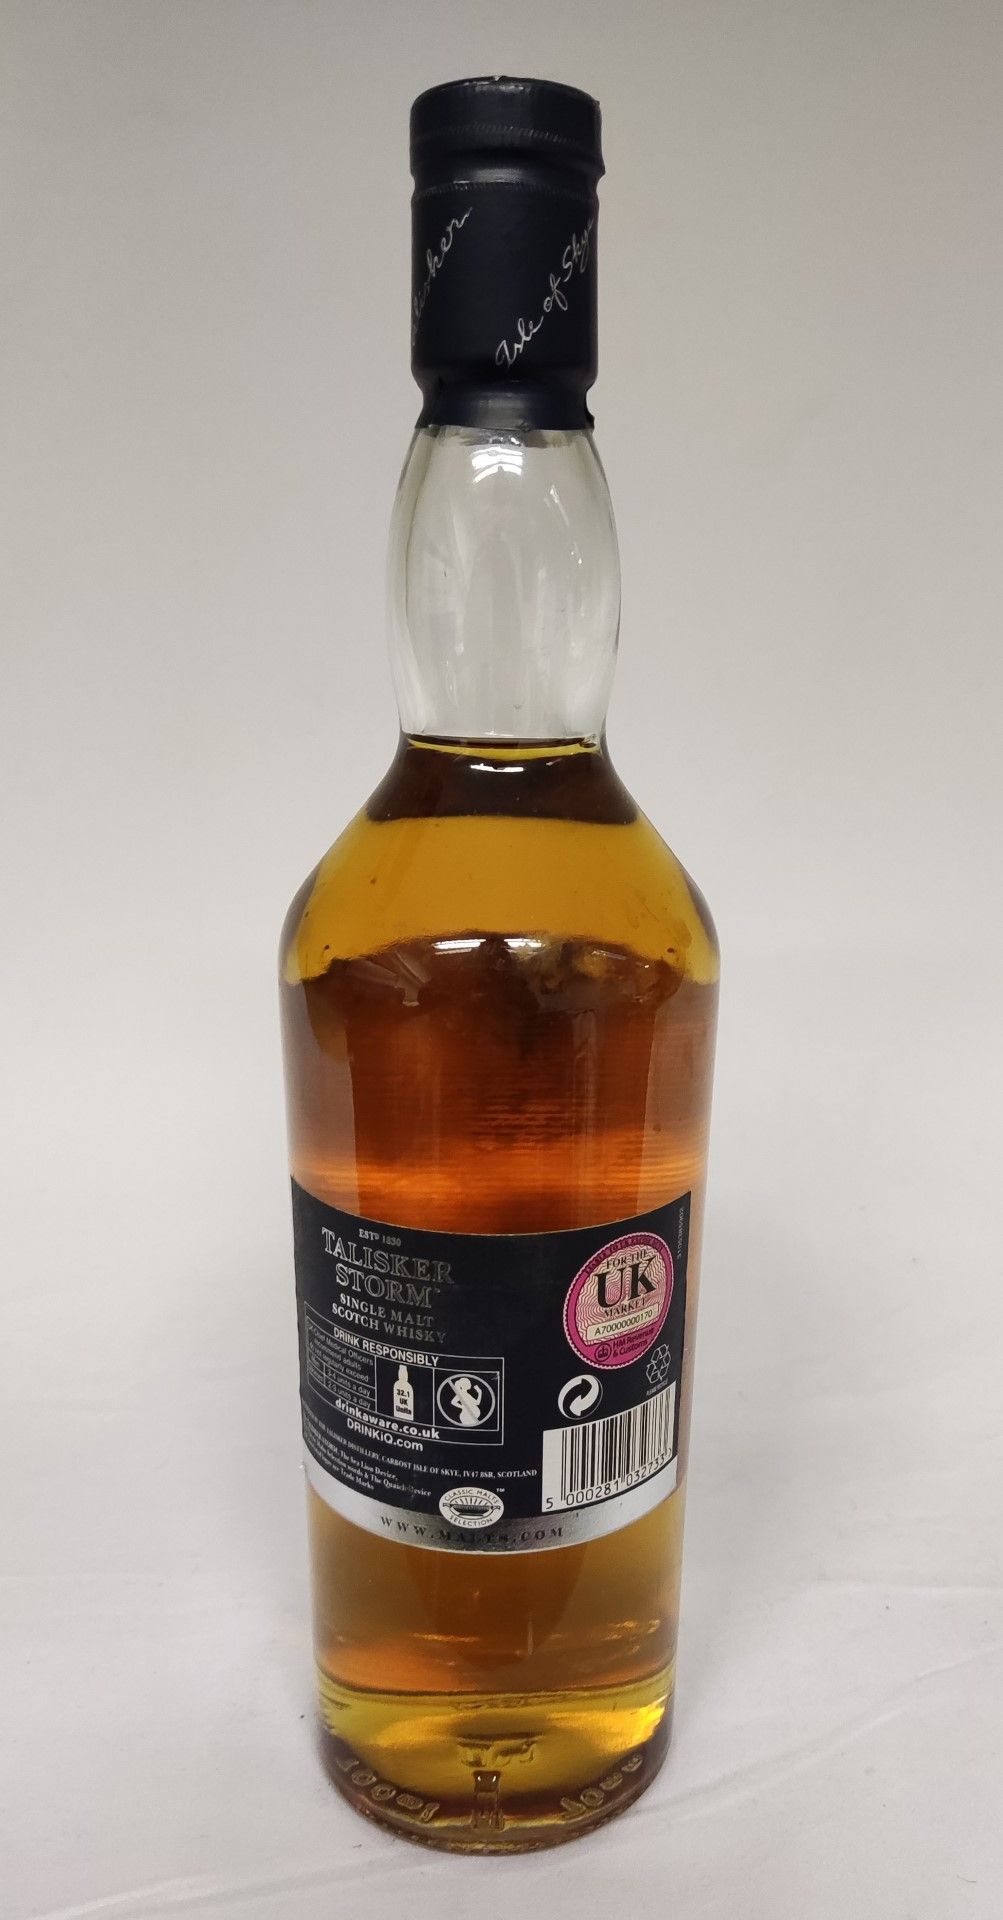 1 x Bottle of Talisker Storm Single Malt Scotch Whisky - 70cl - Retail Price £46 - Ref: WAS447/ - Image 5 of 7